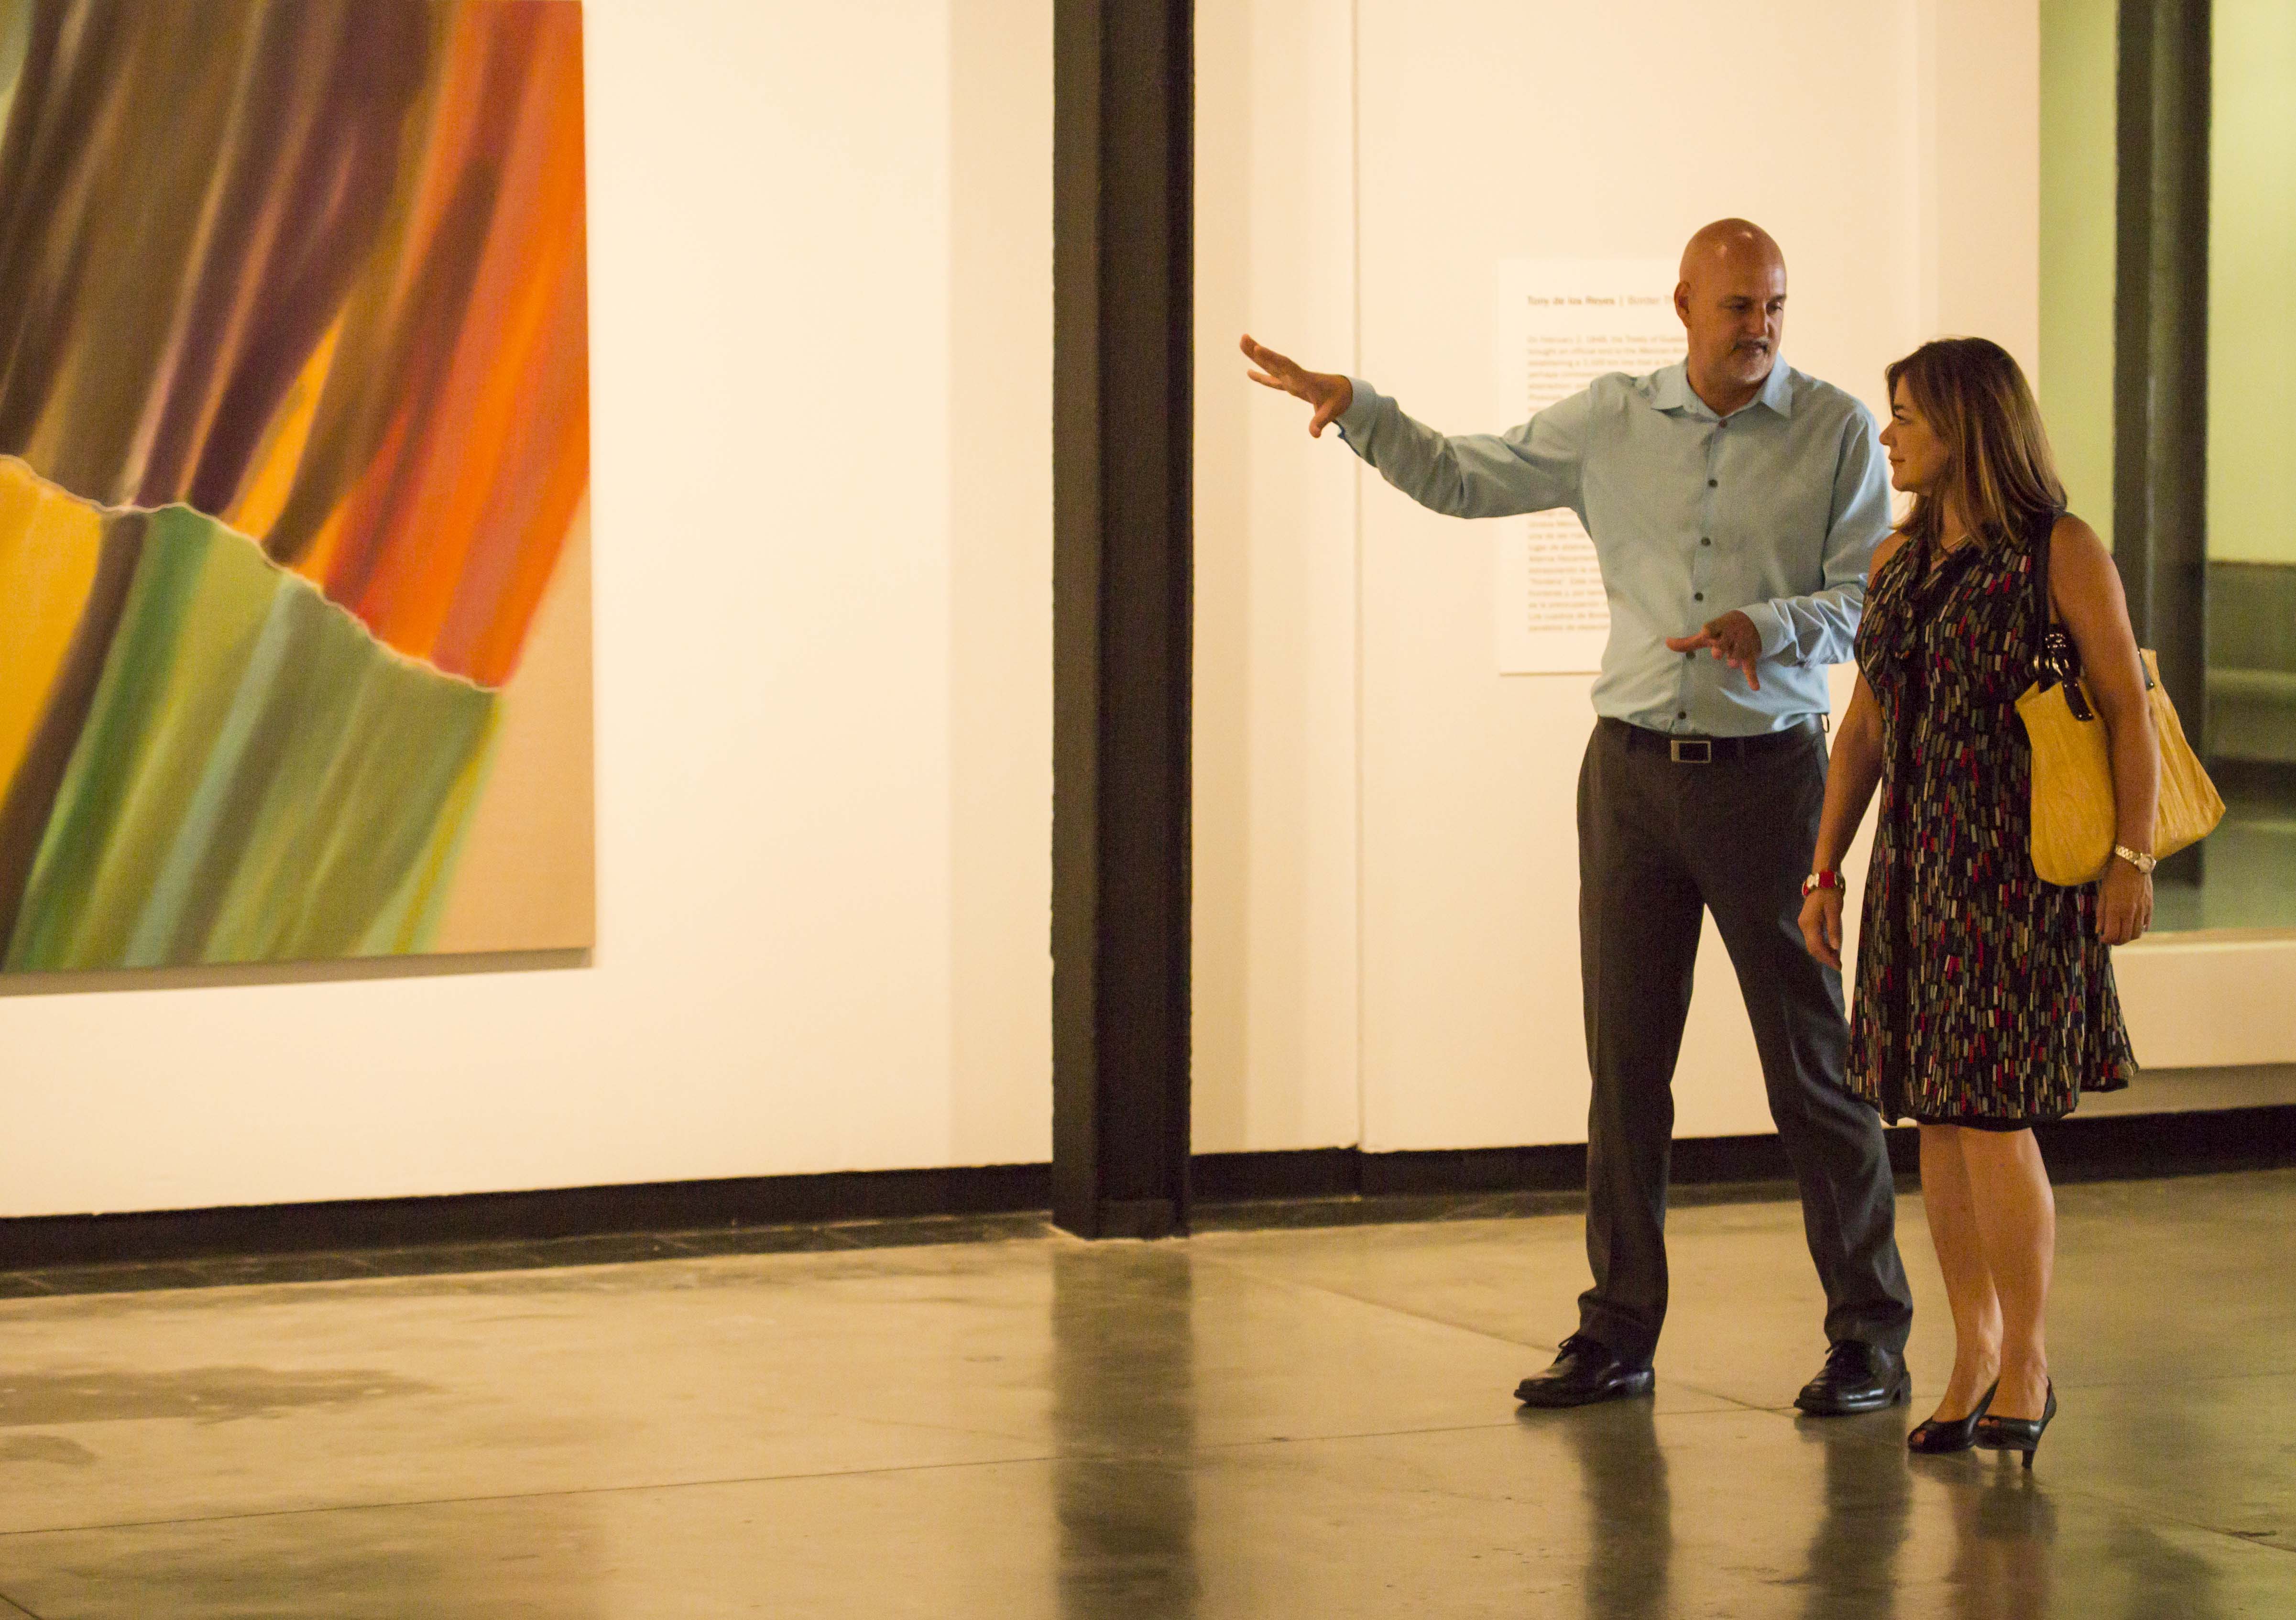 GCAC Director/Chief Curator John D. Spiak and Congresswoman Loretta Sanchez with the work of artist Tony de los Reyes.